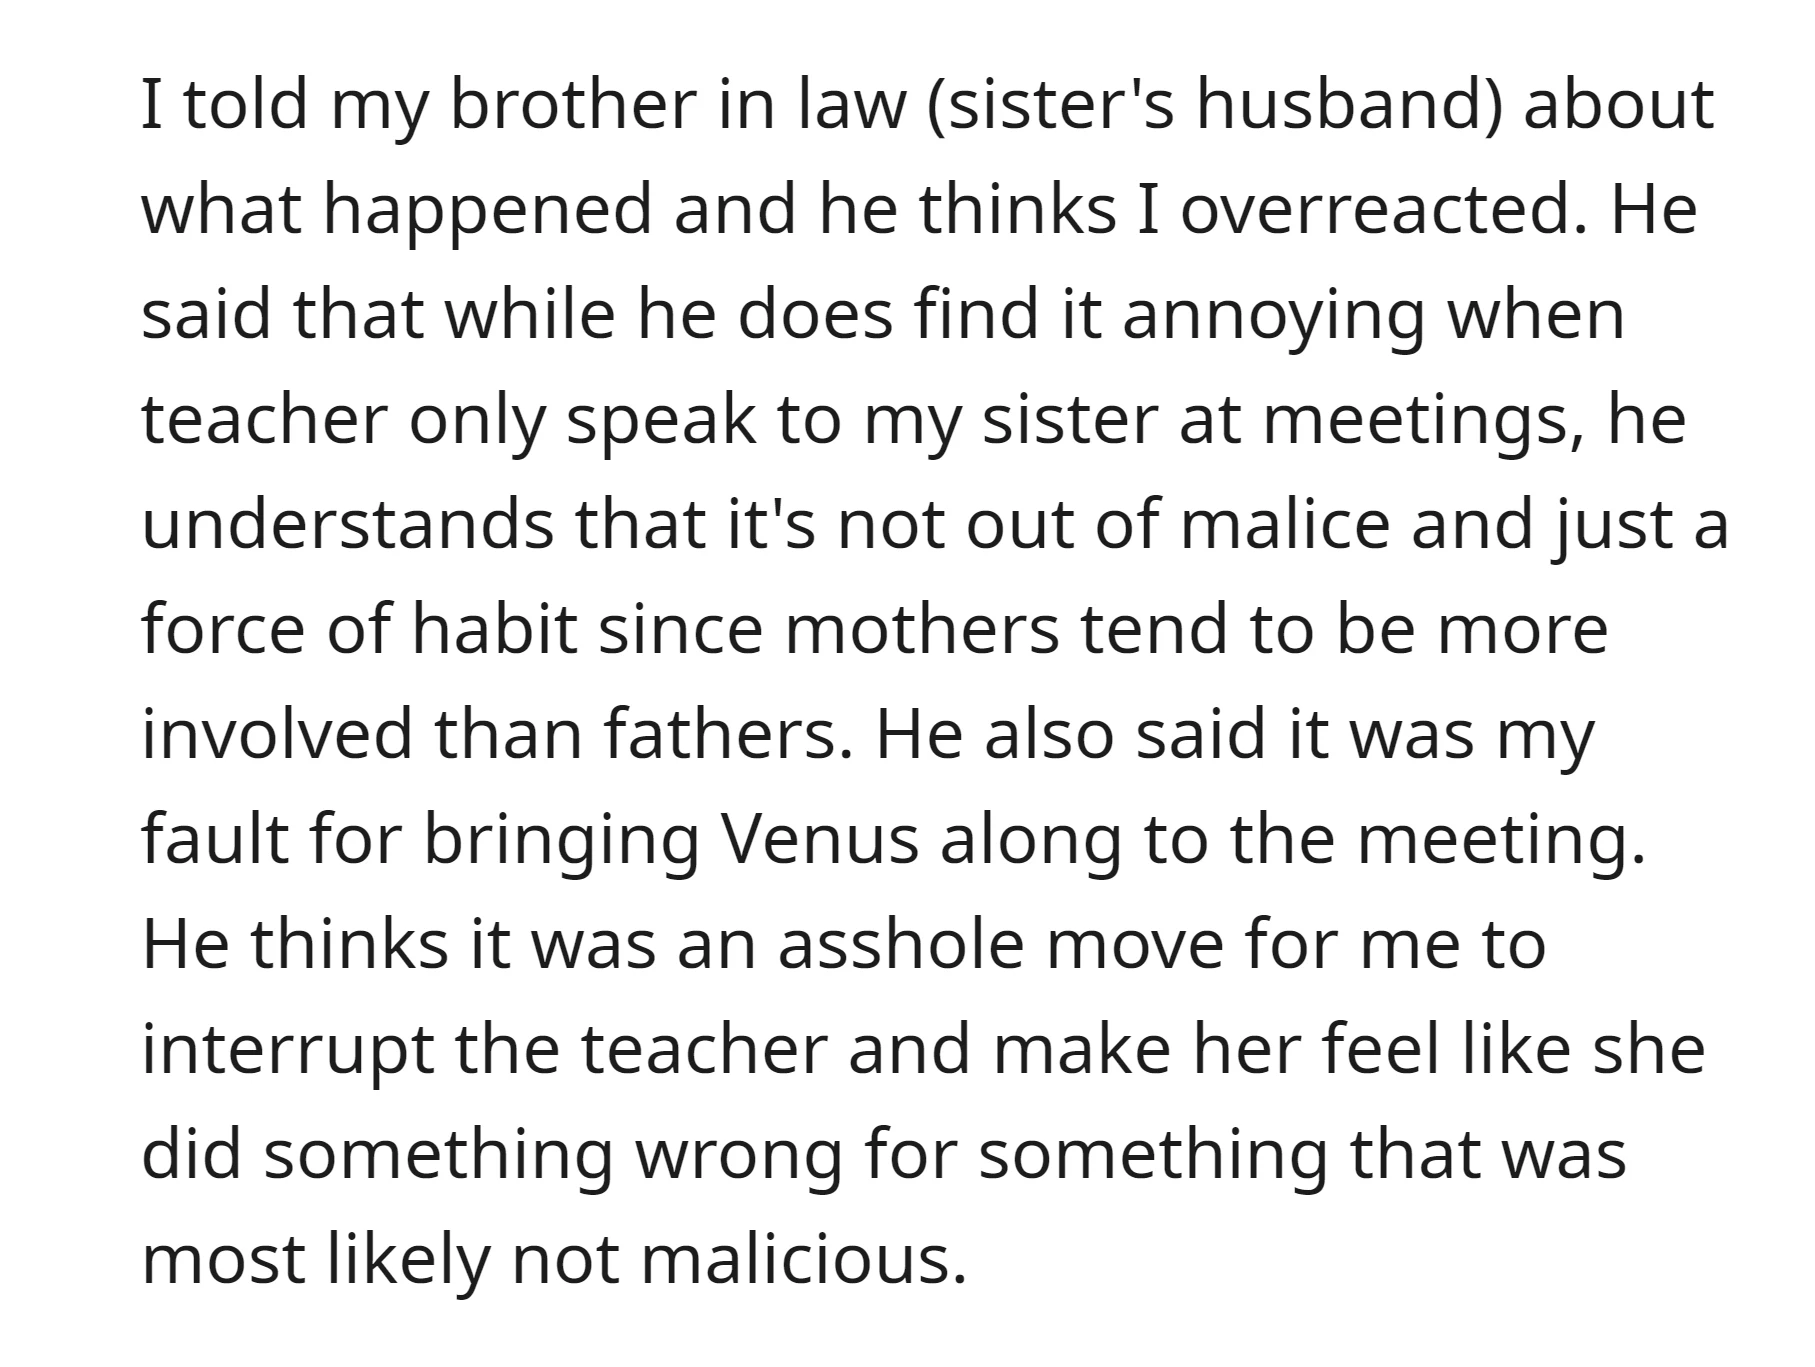 OP's brother-in-law believes the OP overreacted during the parent-teacher meeting